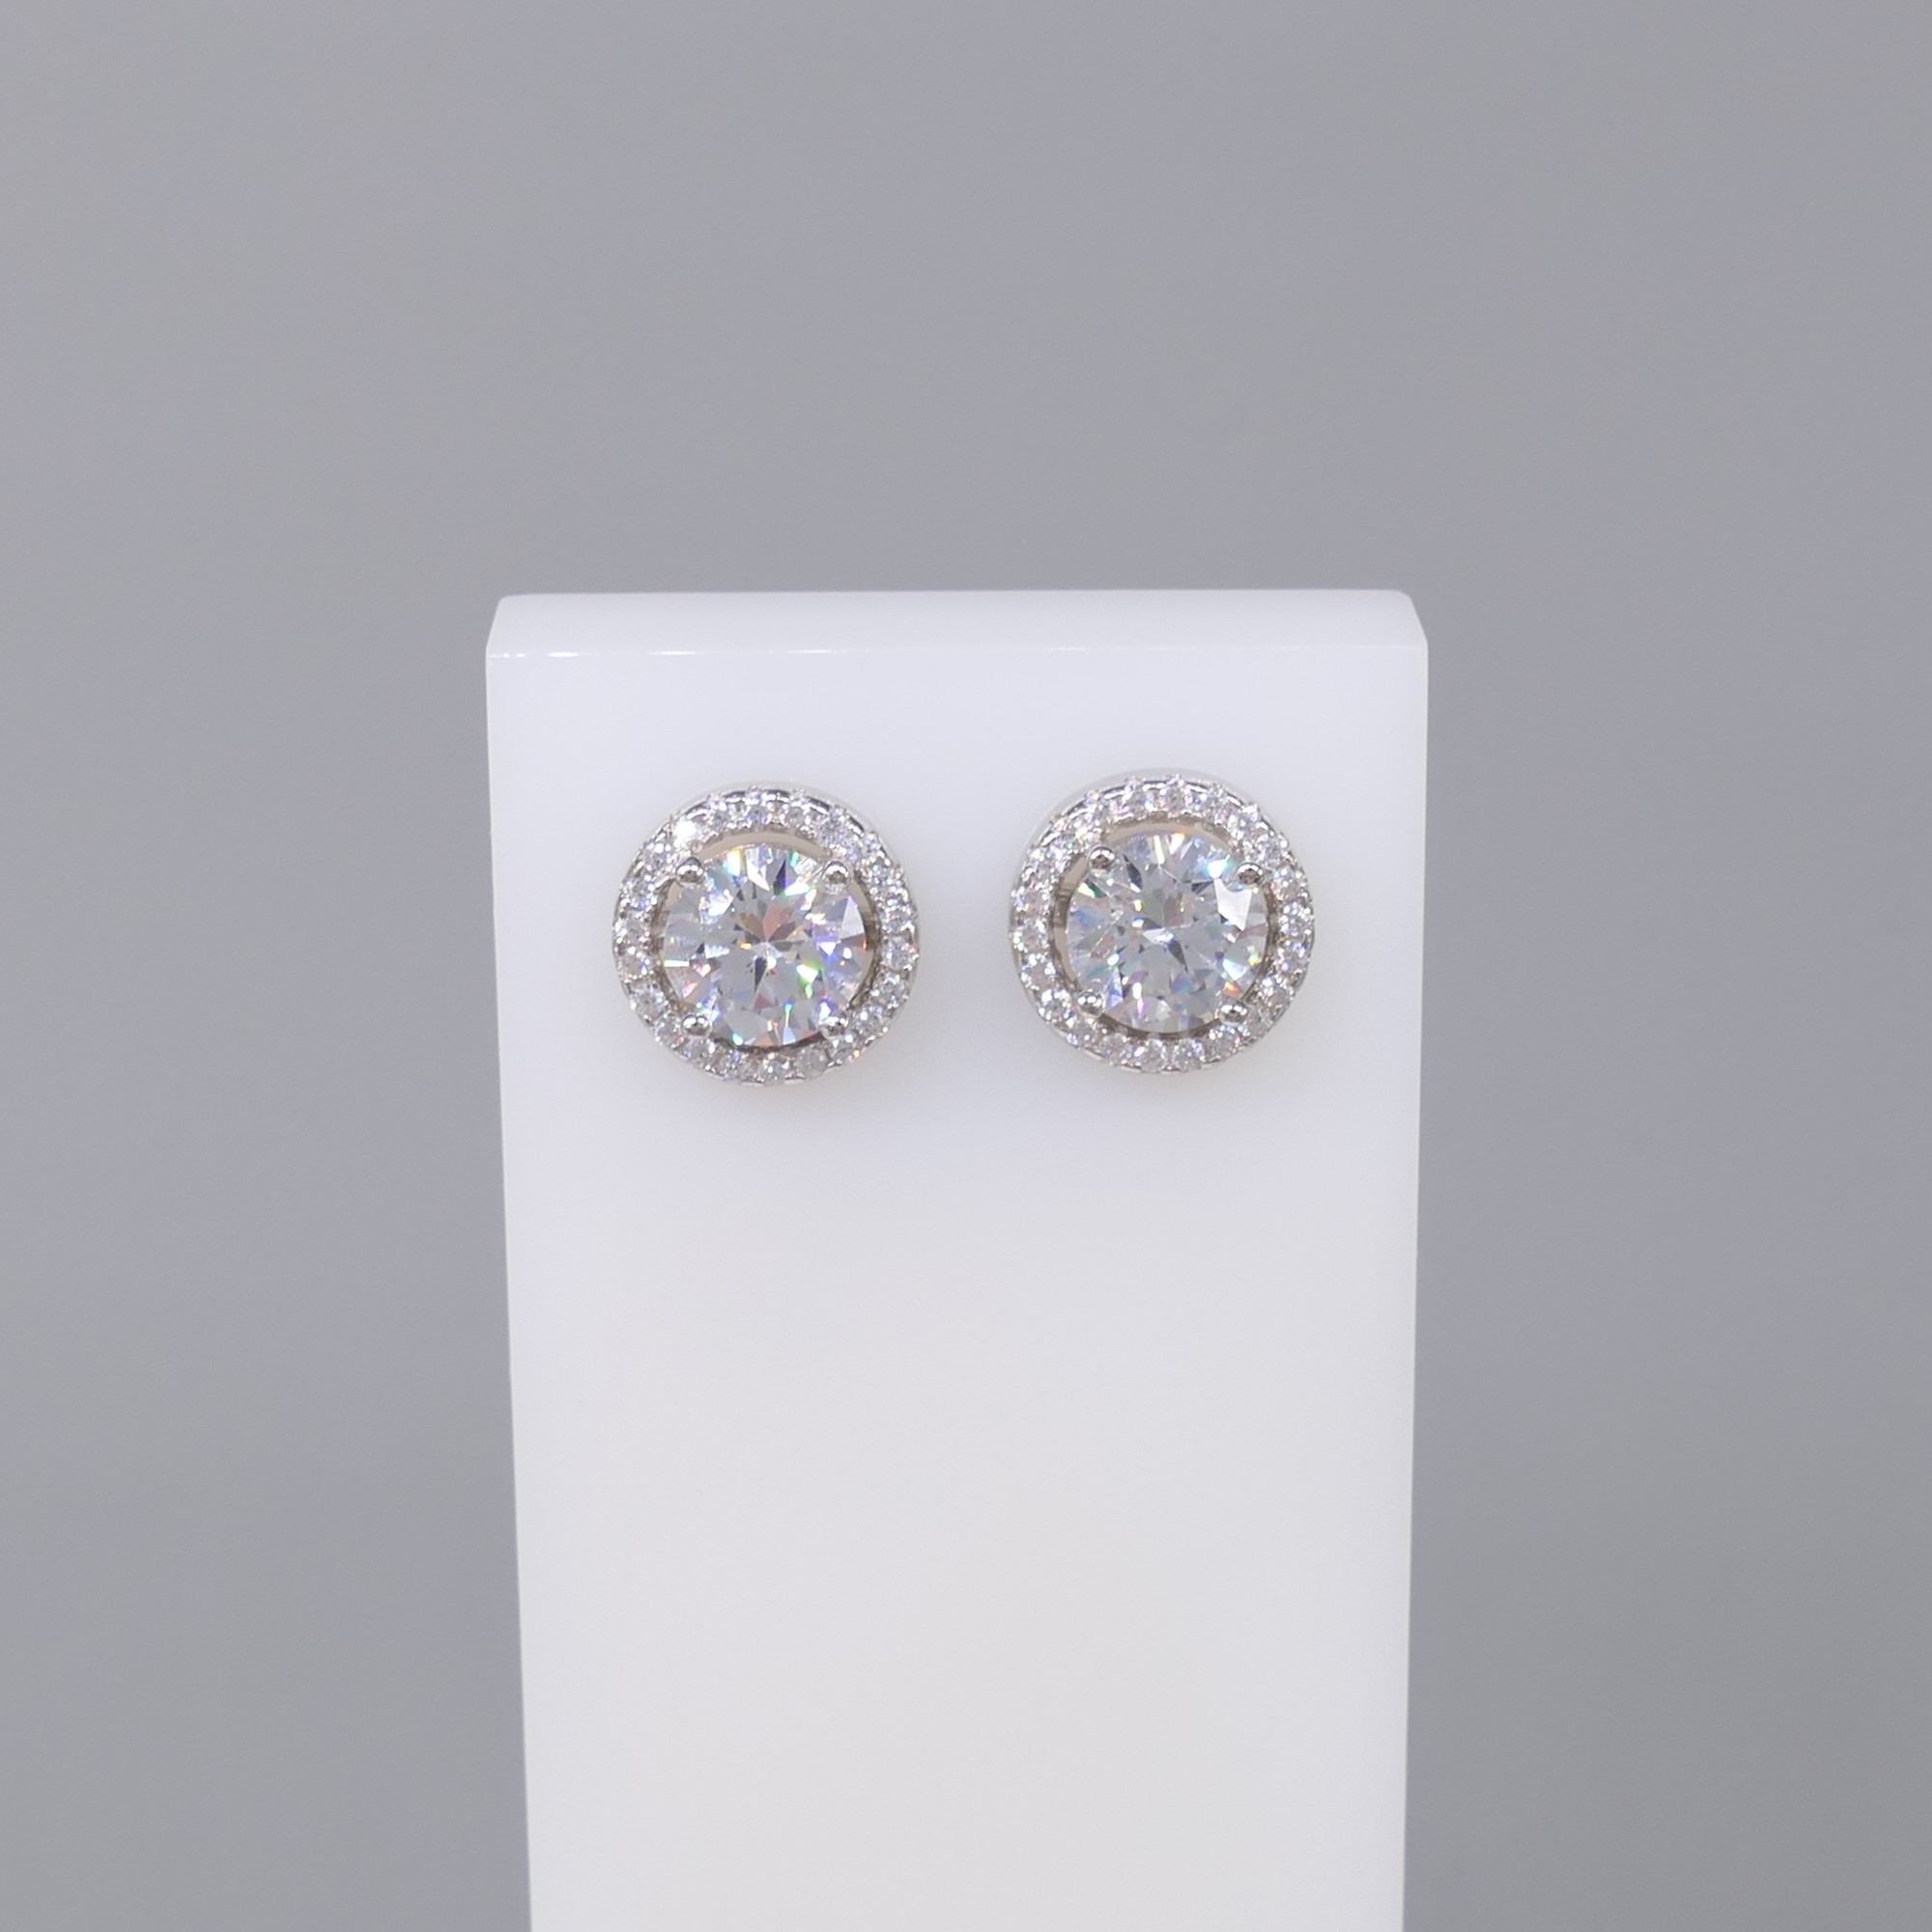 Pair of sterling silver halo stud earrings - Image 5 of 5